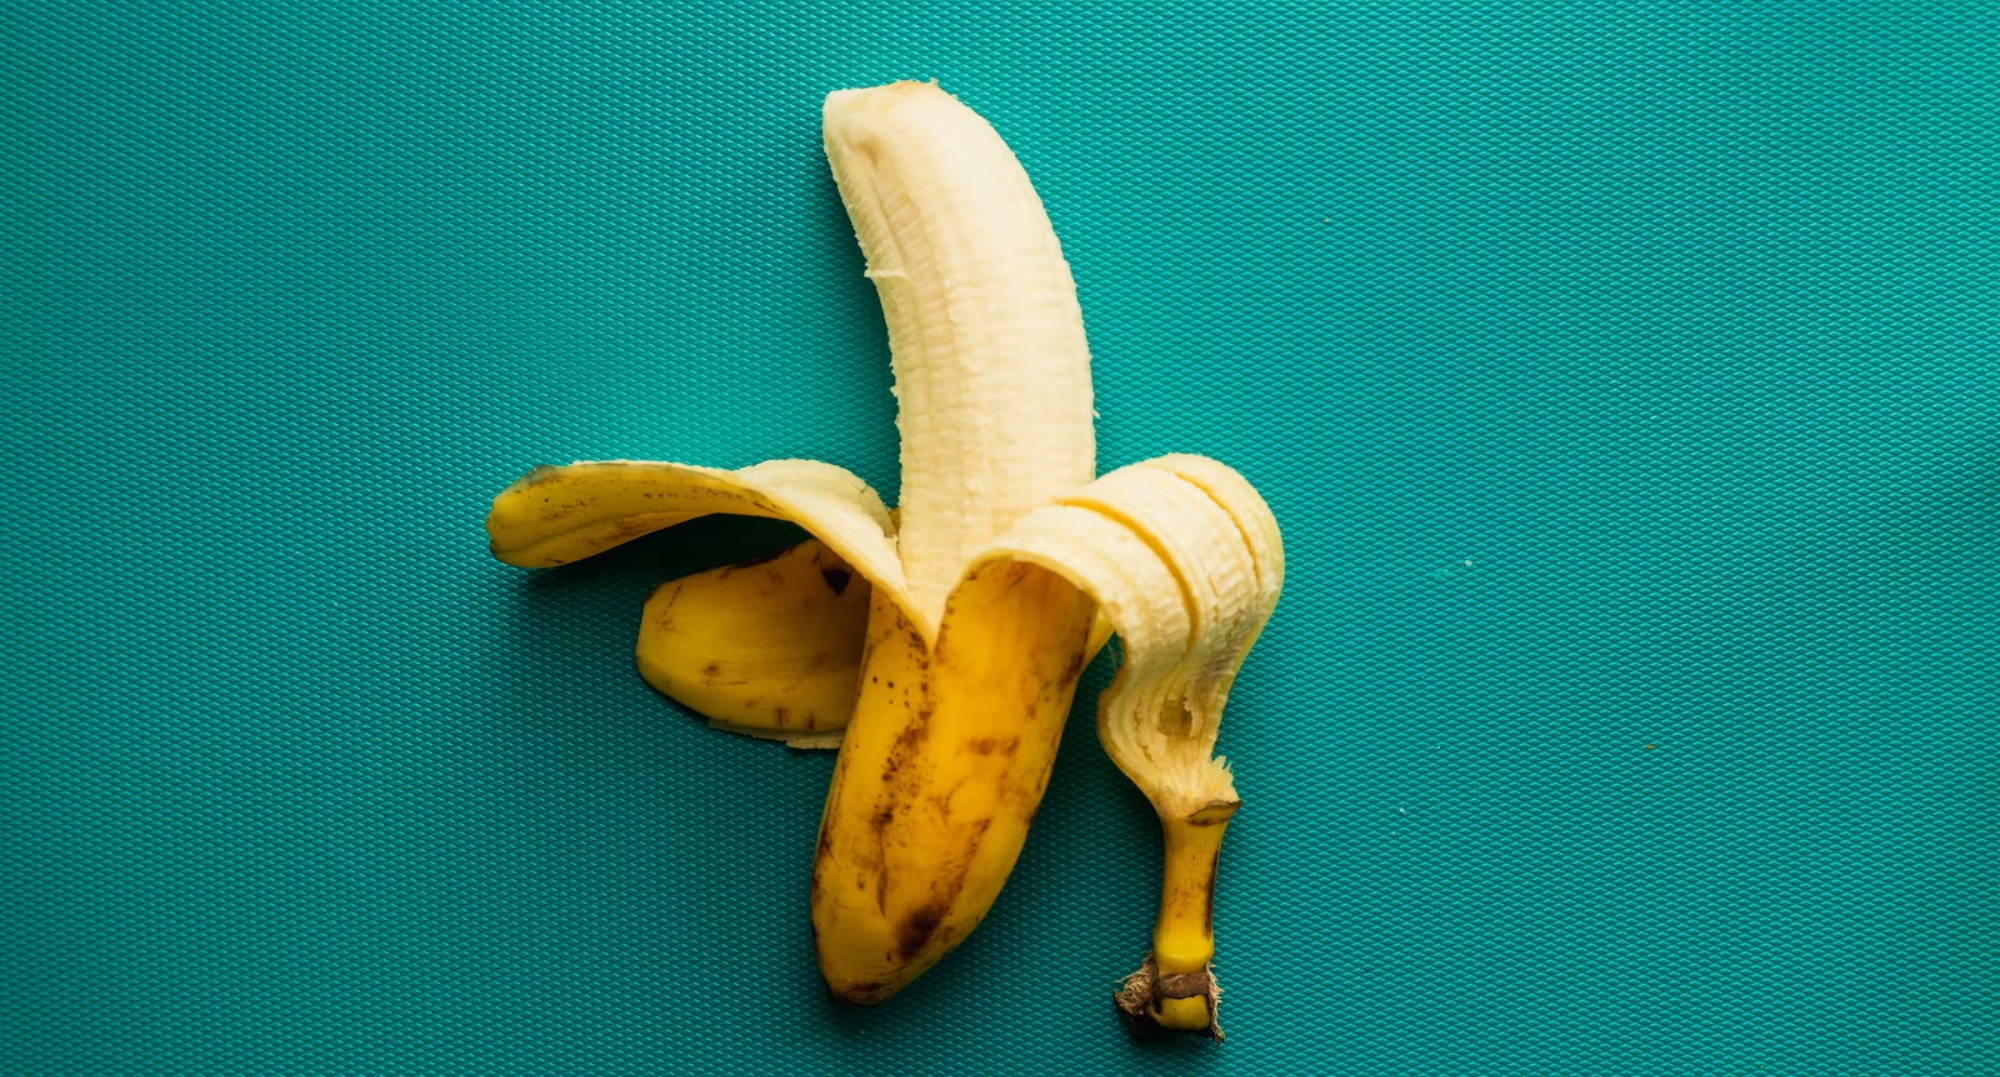 a half-peeled banana against a teal background